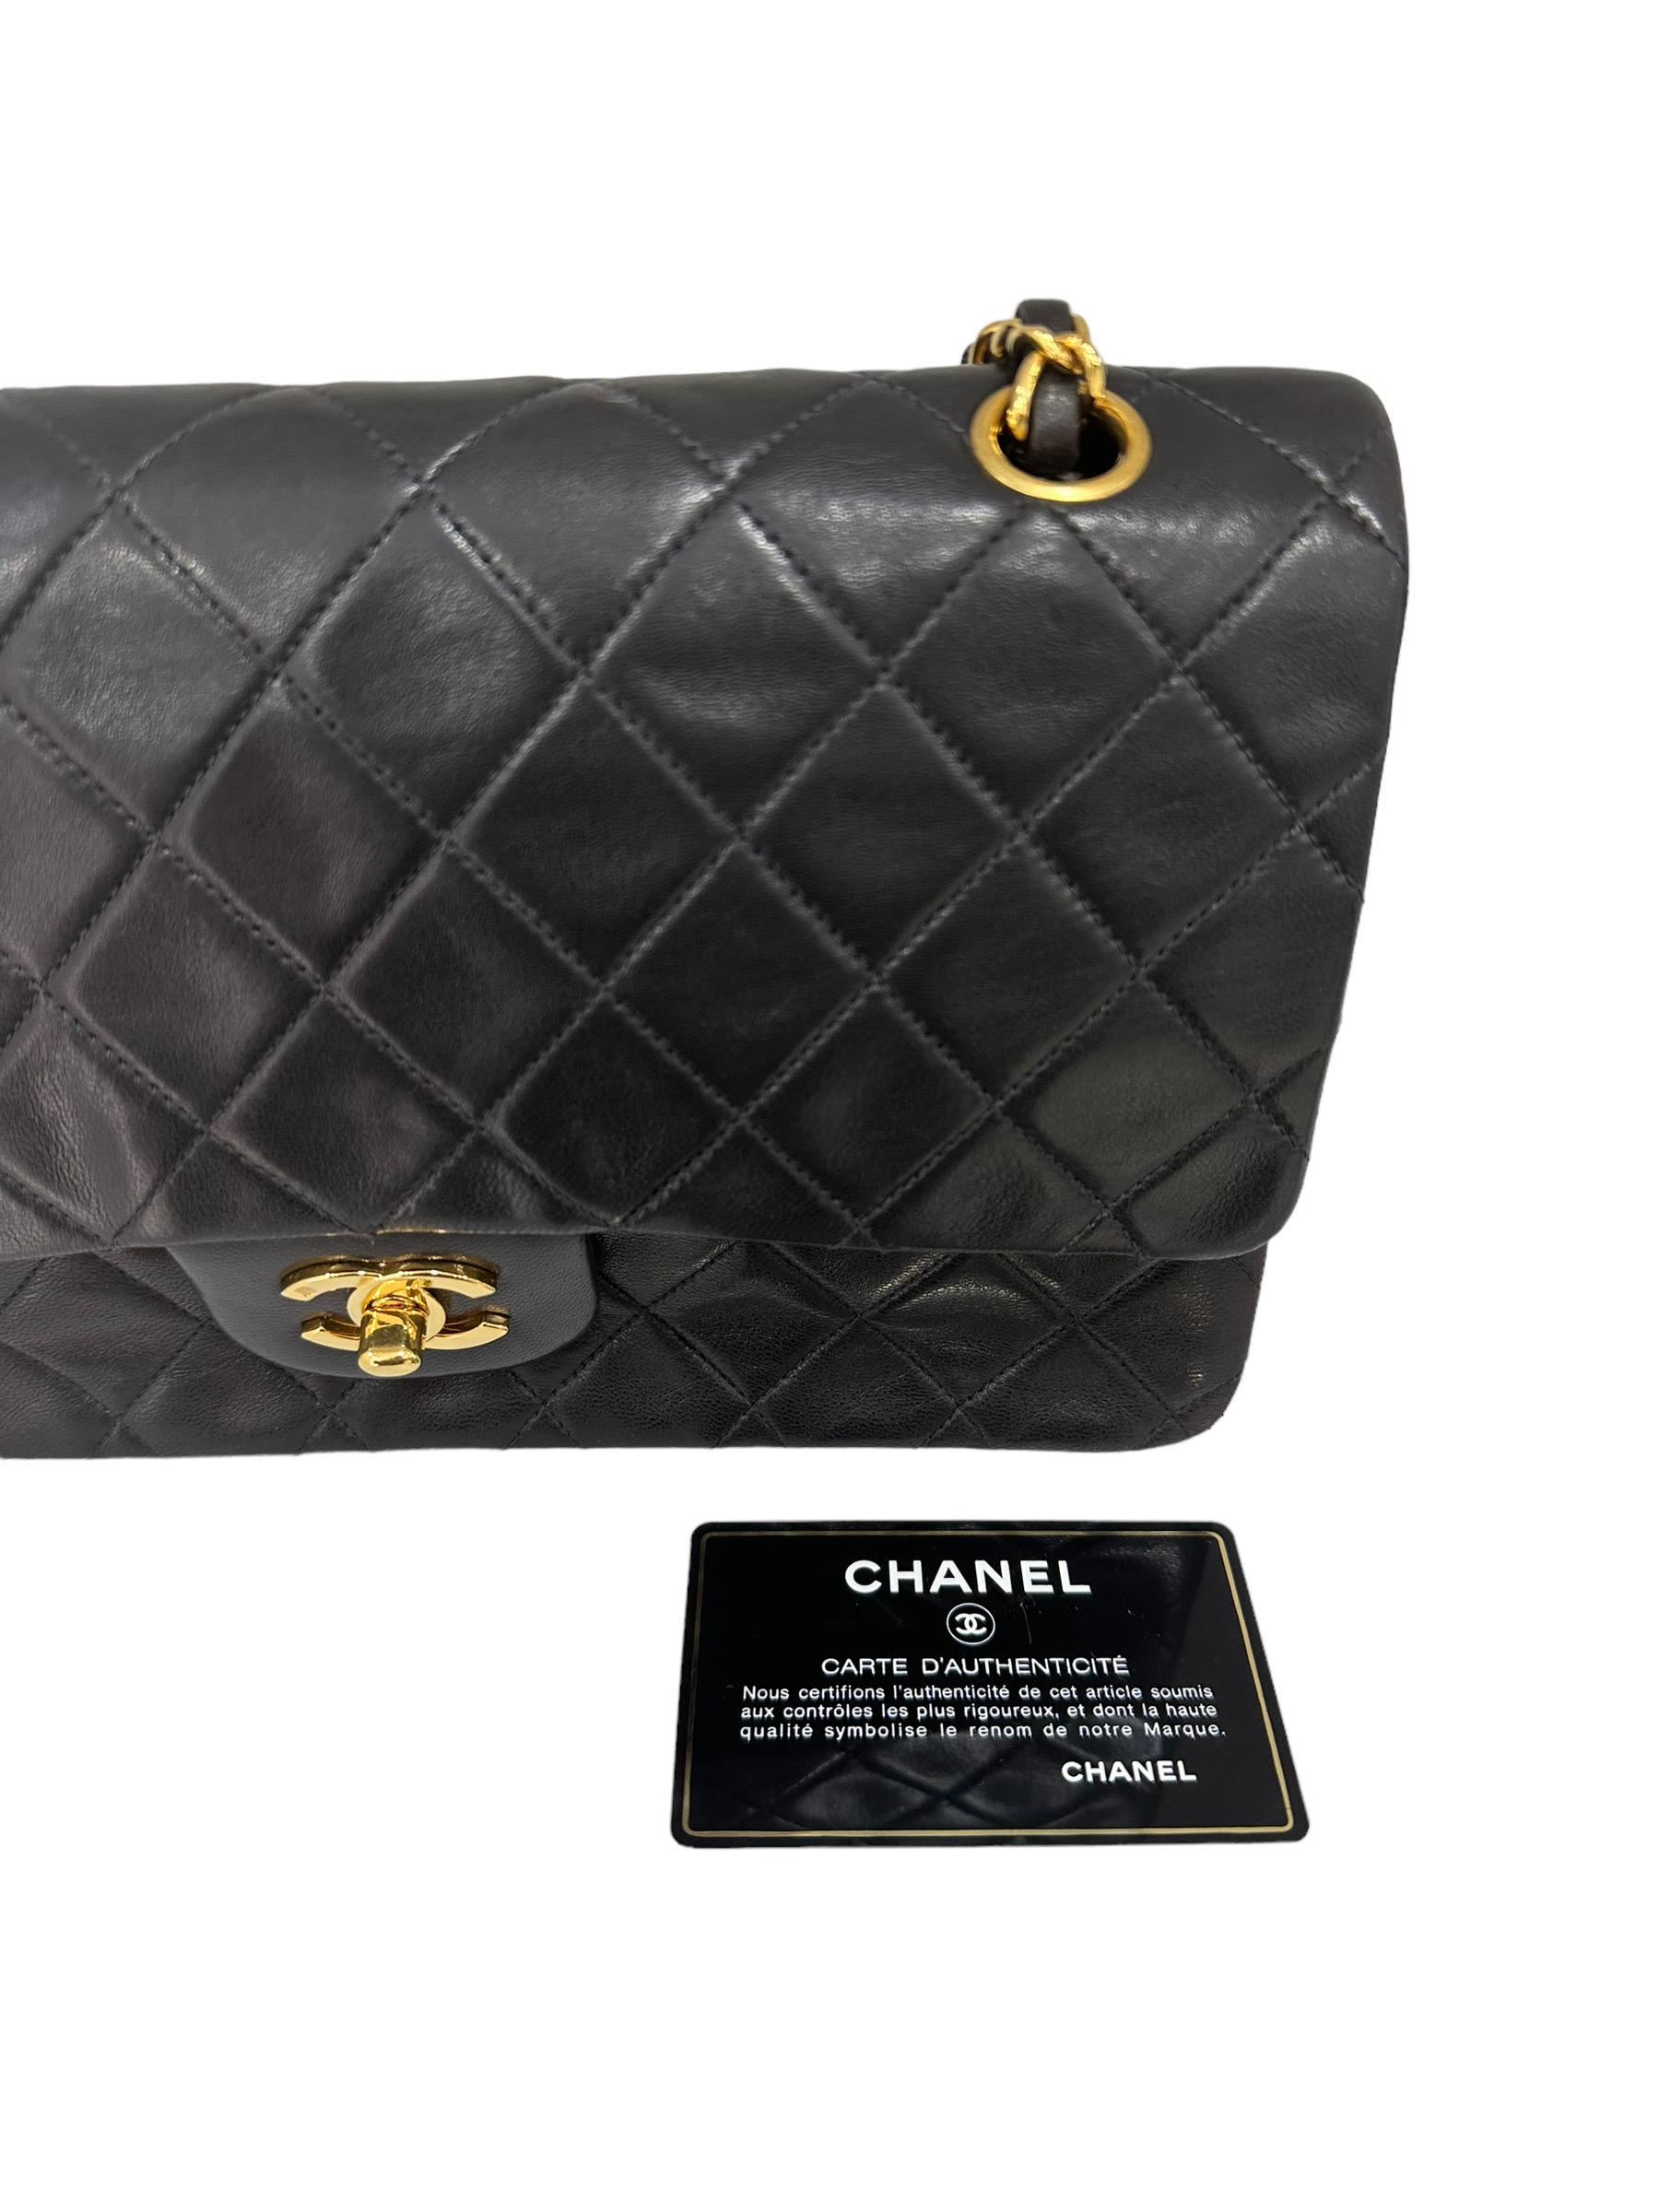 1996 Chanel Timeless Classic 2.55 Black Leather Top Shoulder Bag For Sale 14